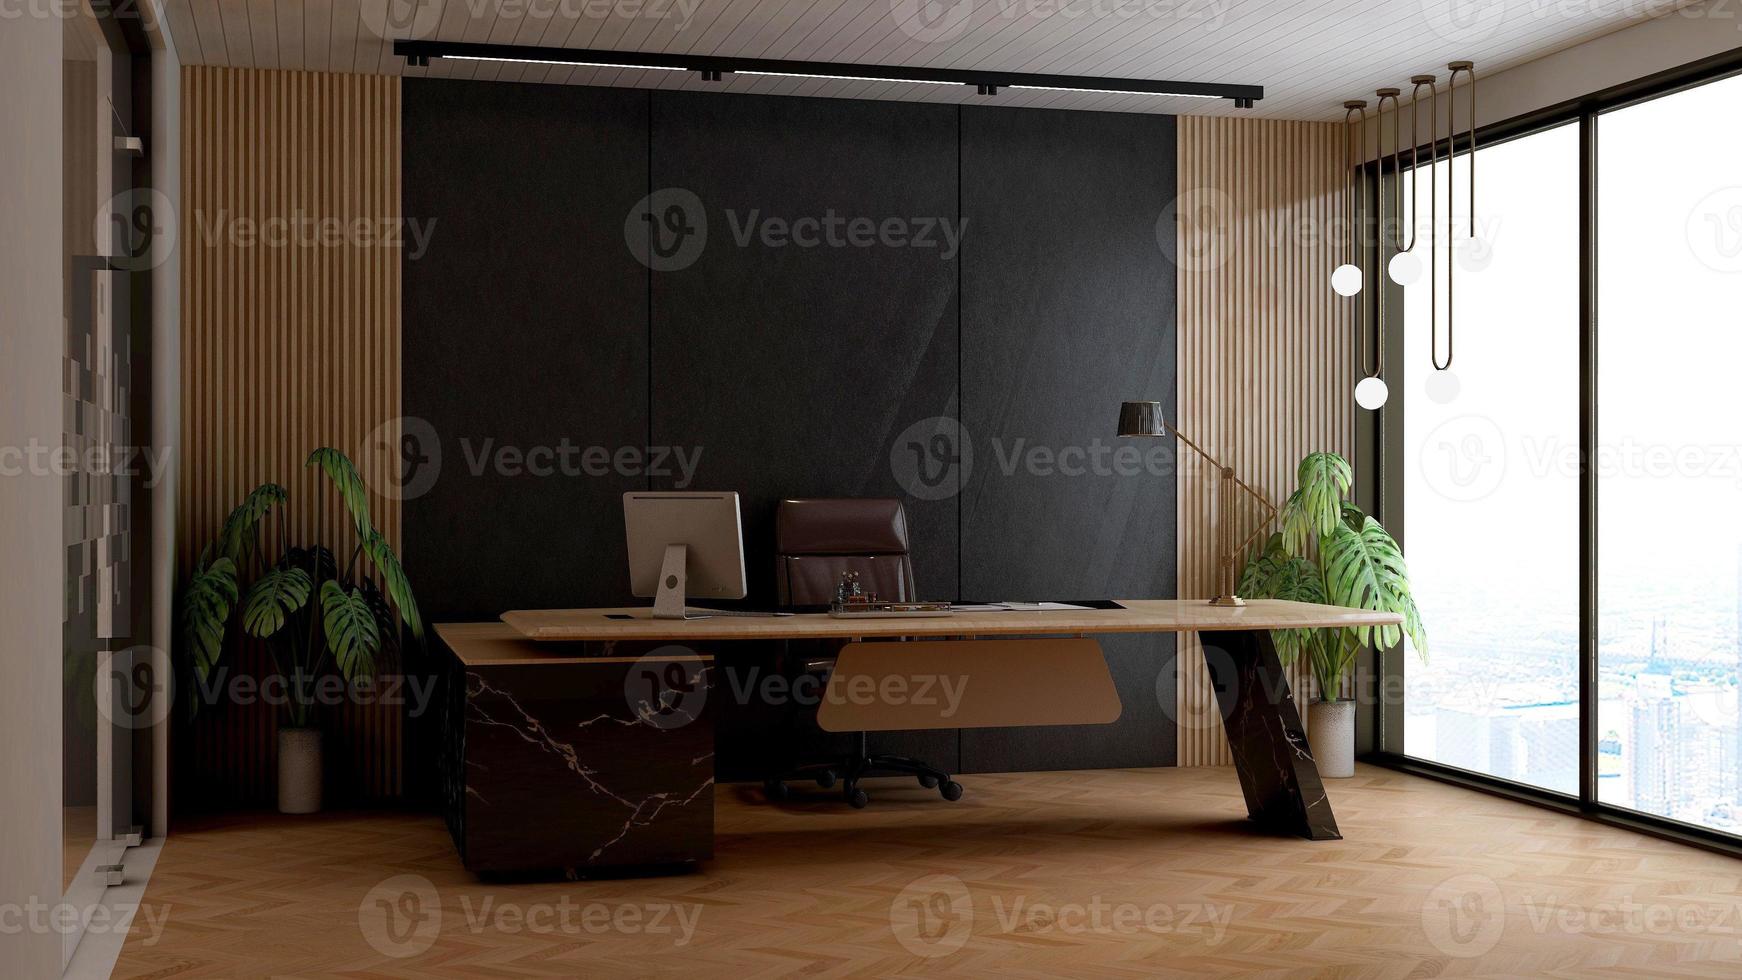 3D Render office design - manager room interior wall mockup photo